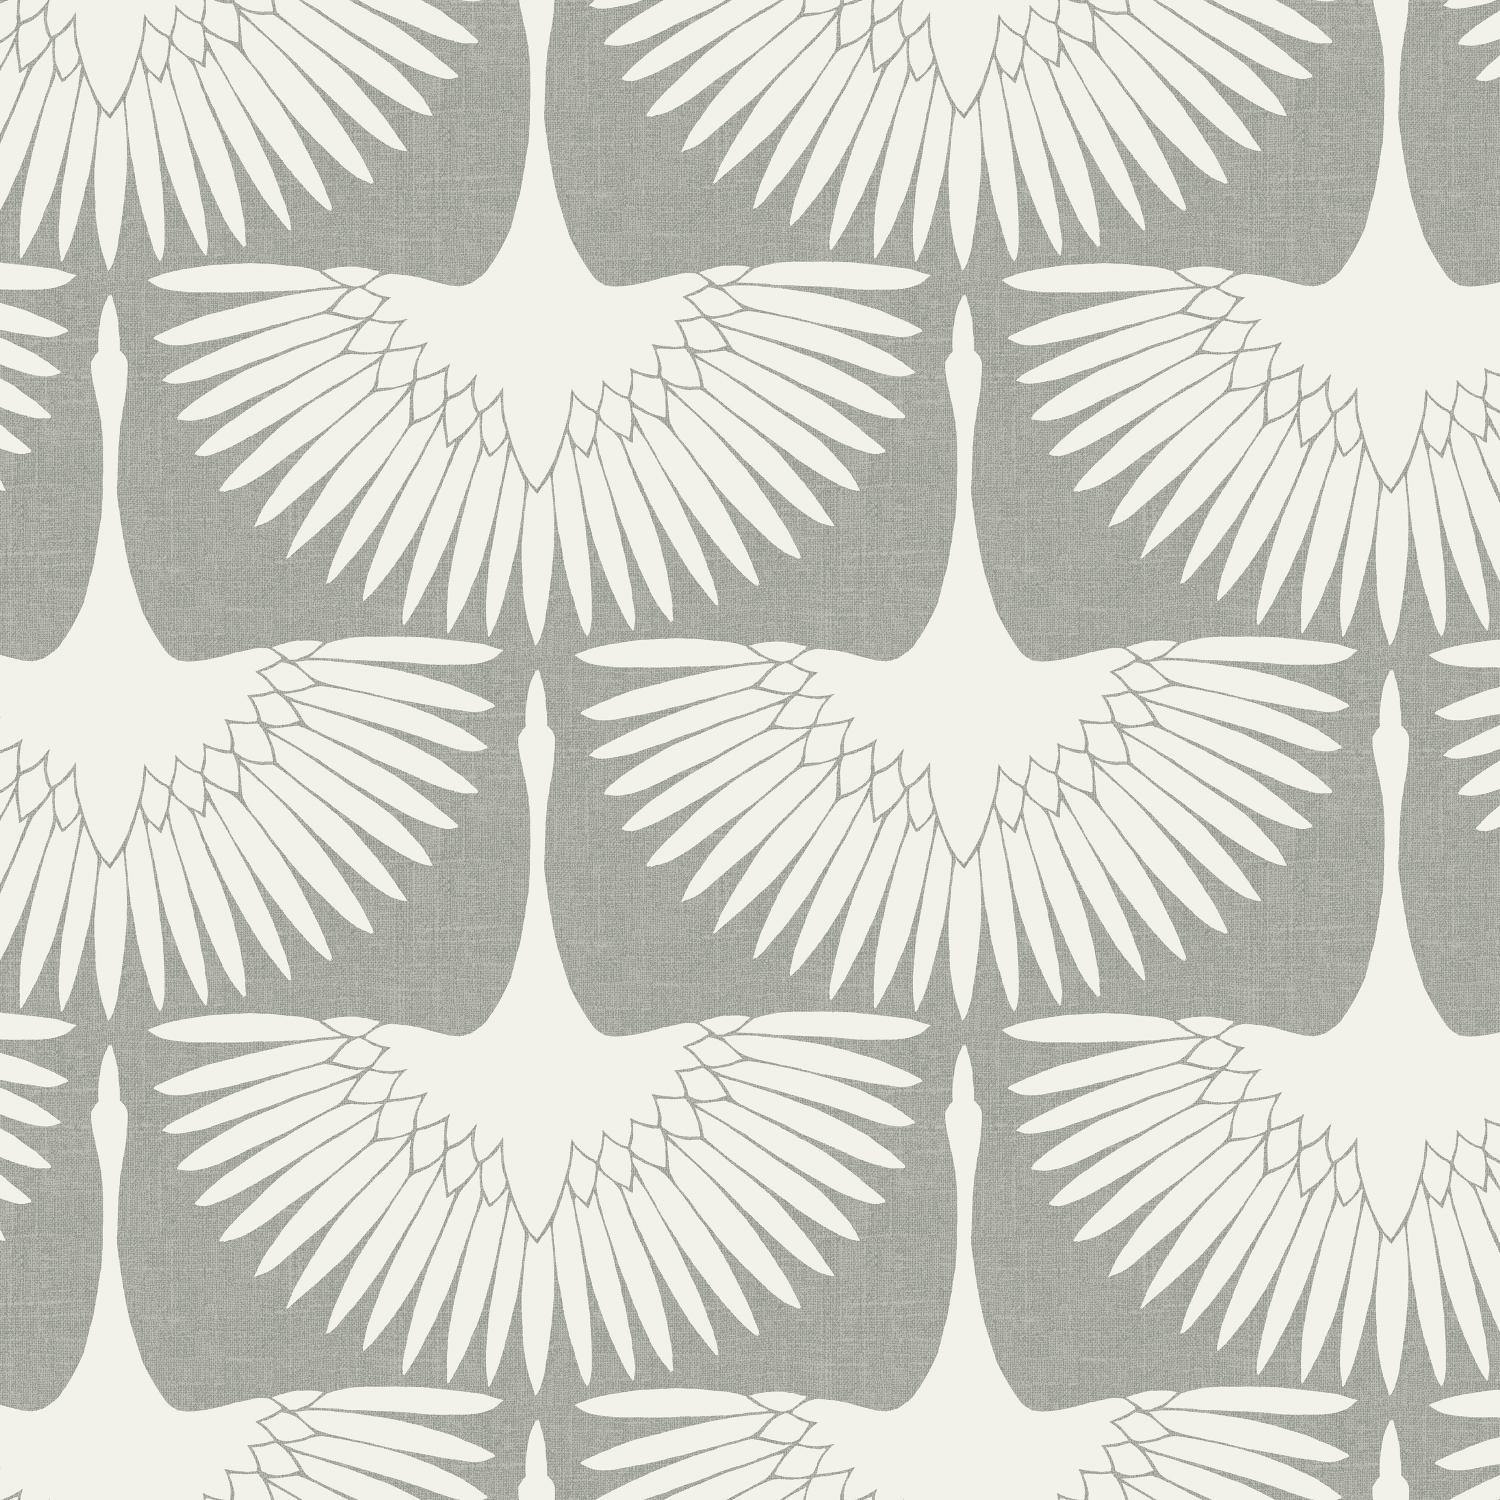 Genevieve Gorder Feather Flock Chalk Peel and Stick Wallpaper – Maker & Moss